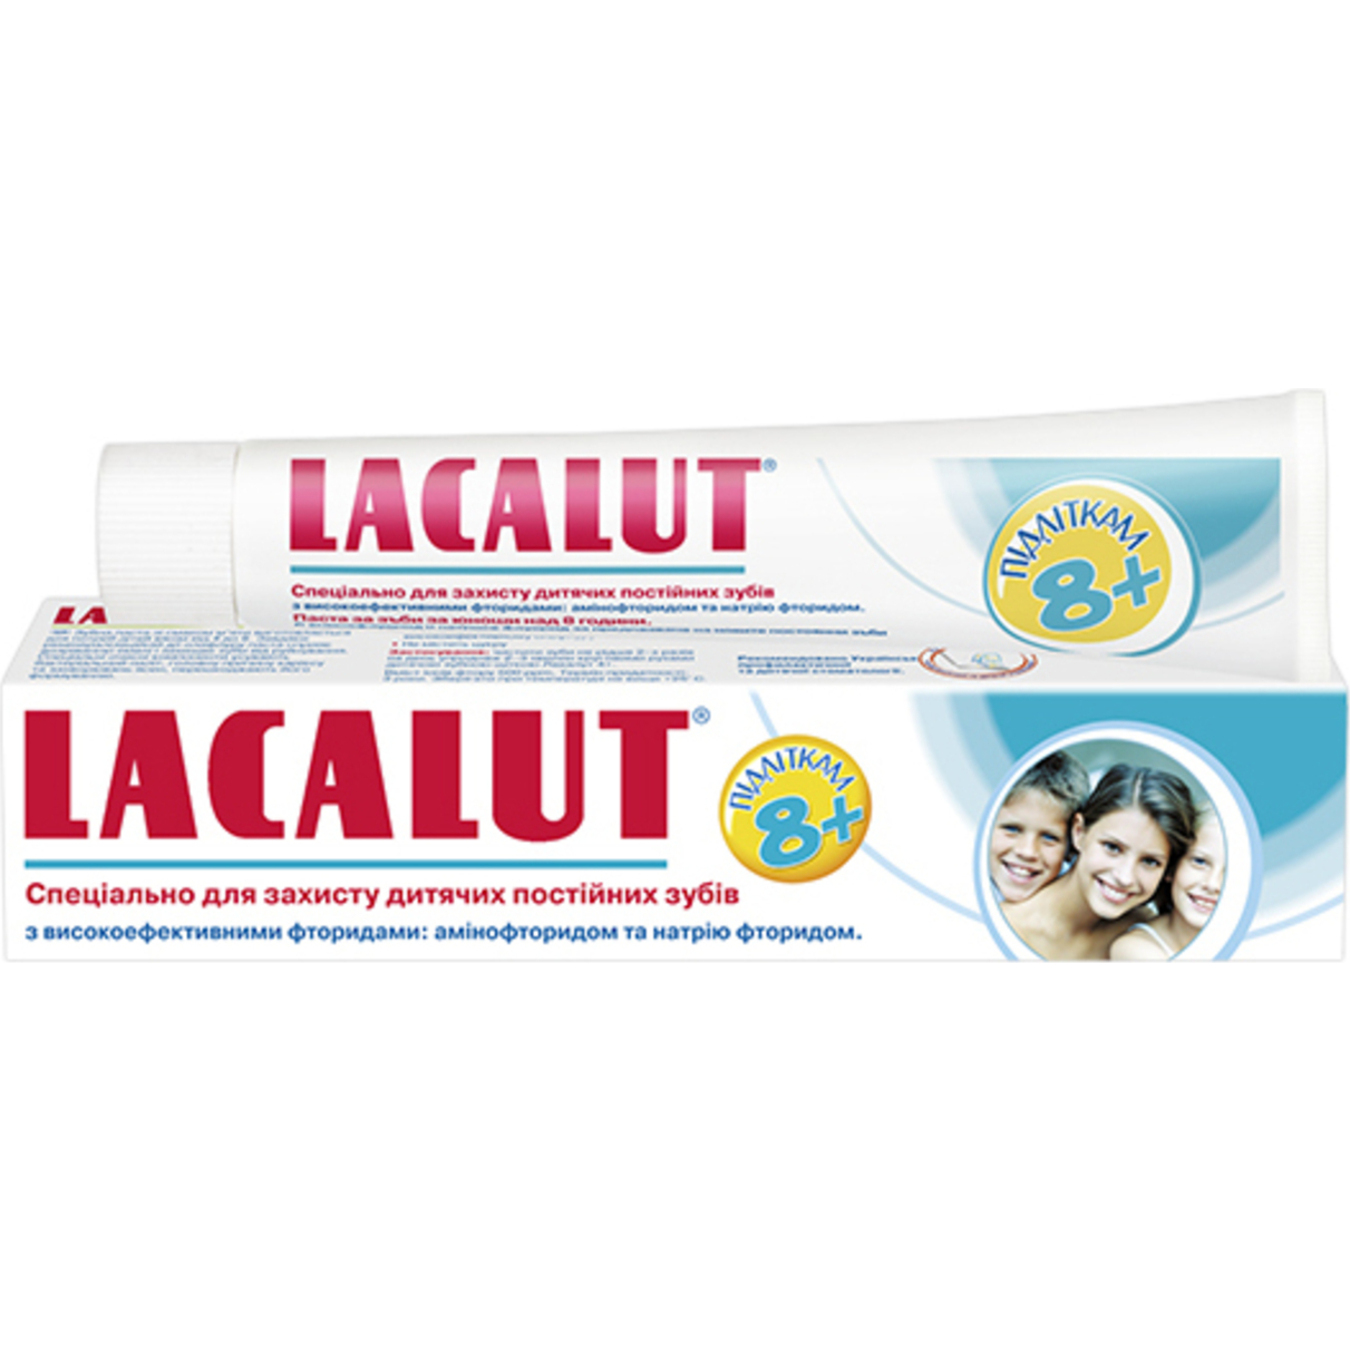 Lacalut Teenage Toothpaste 8+ 50ml